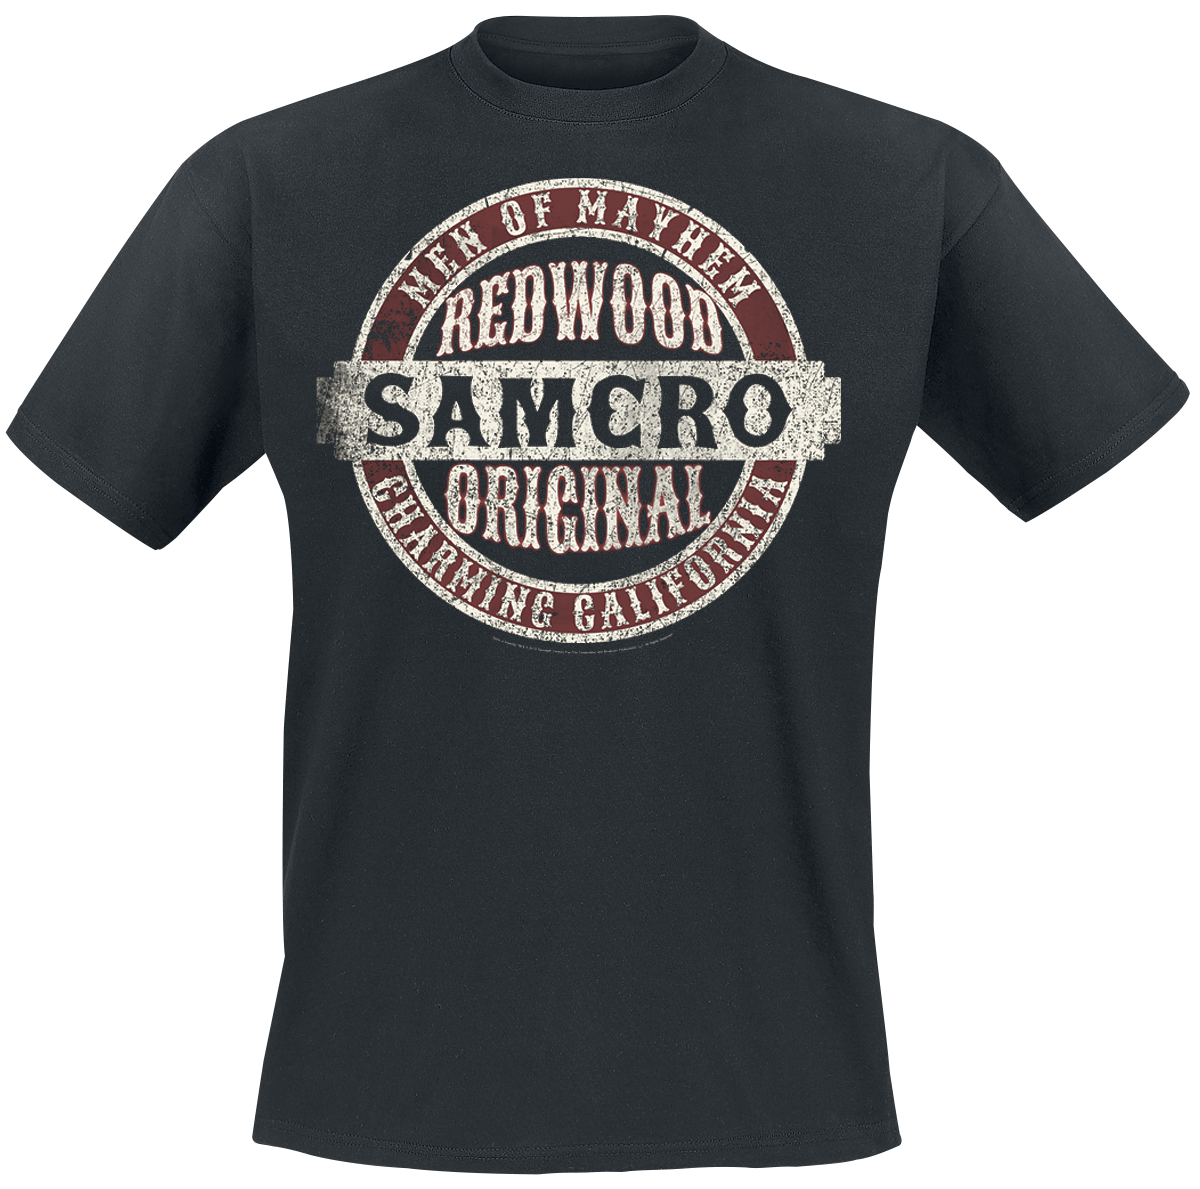 Sons Of Anarchy - Samcro Original - T-Shirt - black image